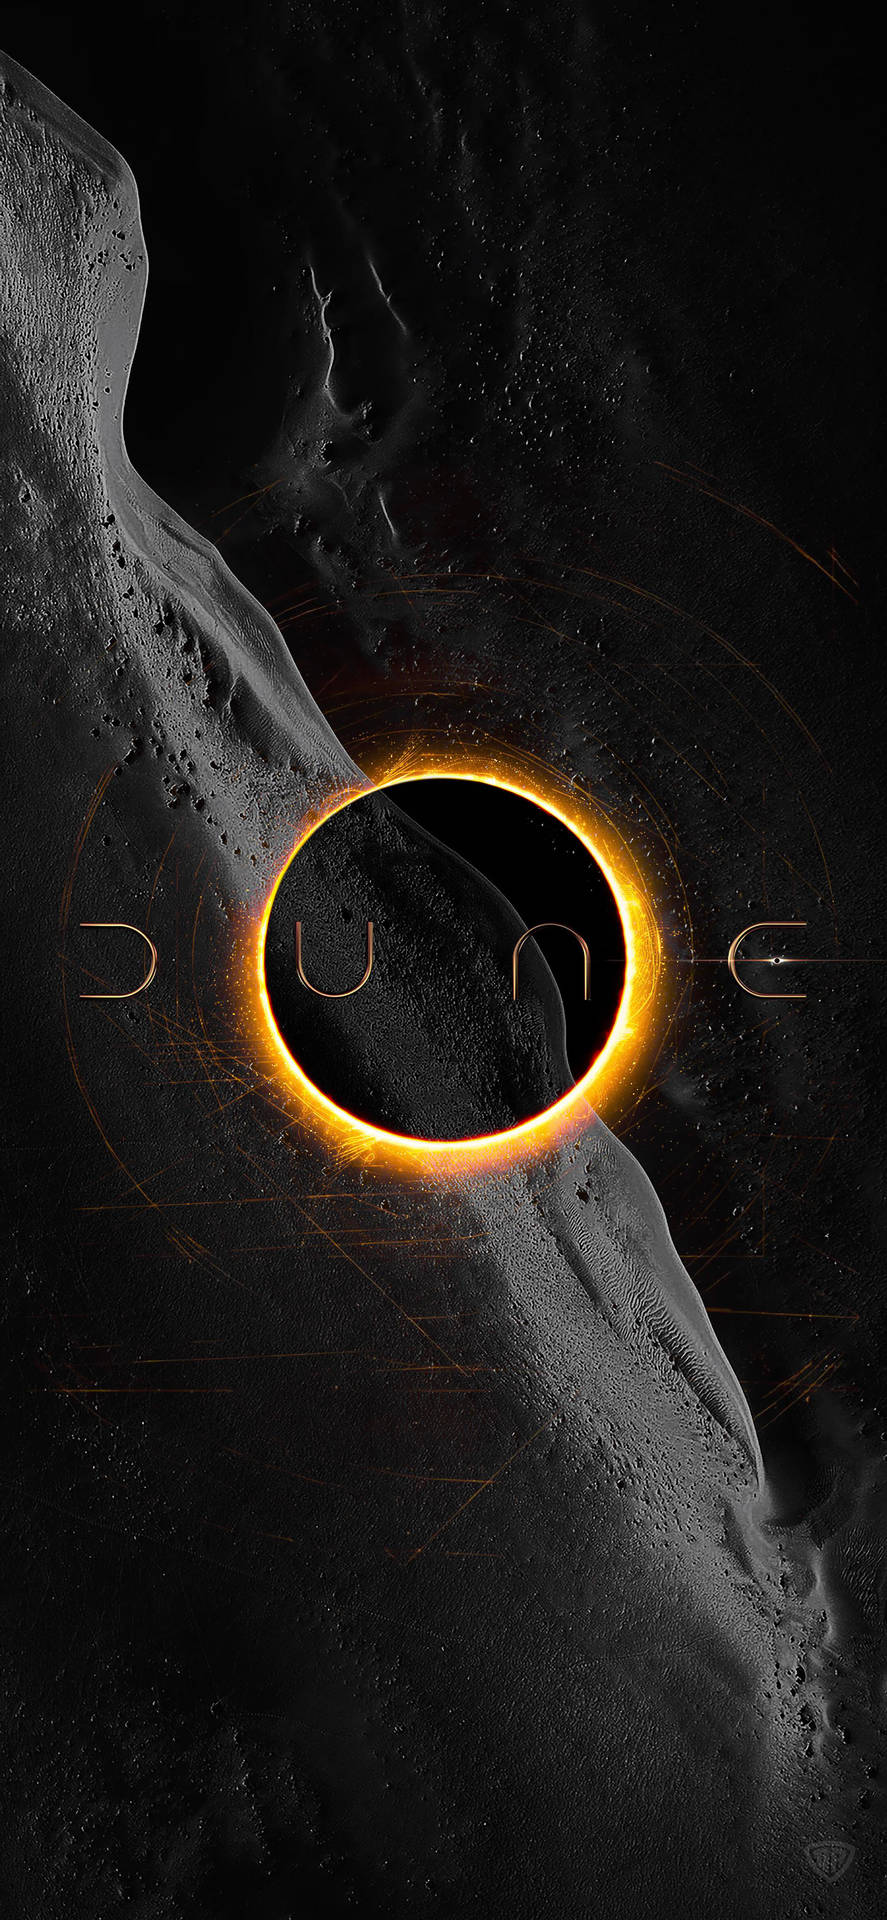 Dune 2021 Movie Eclipse Poster Background